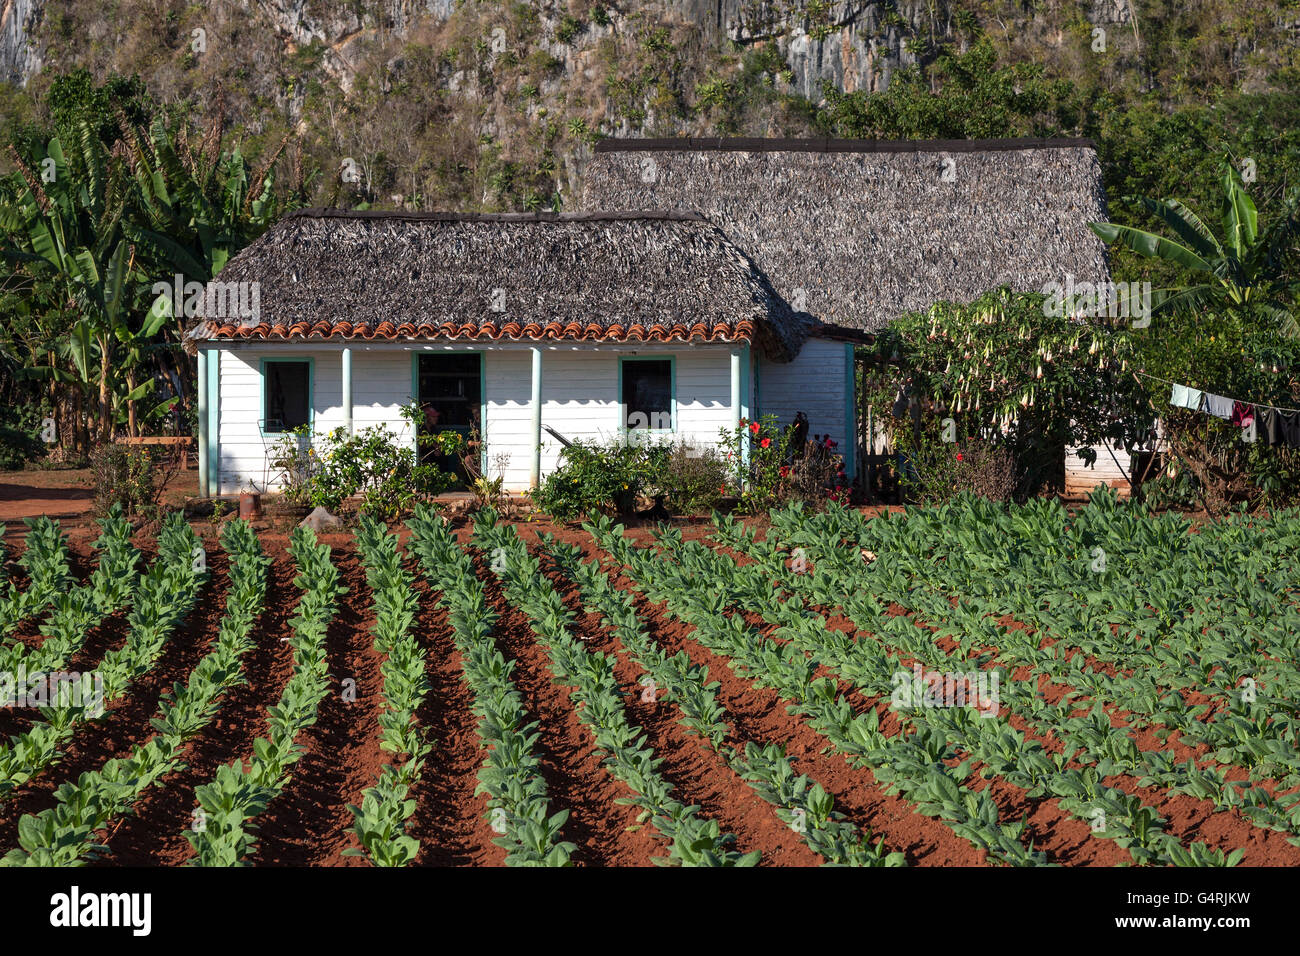 Tabakanbau, Tabakfeld, Eigentum von Tabak Landwirt in der Nähe von Vinales, Vinales, Provinz Pinar Del Rio, Kuba Stockfoto